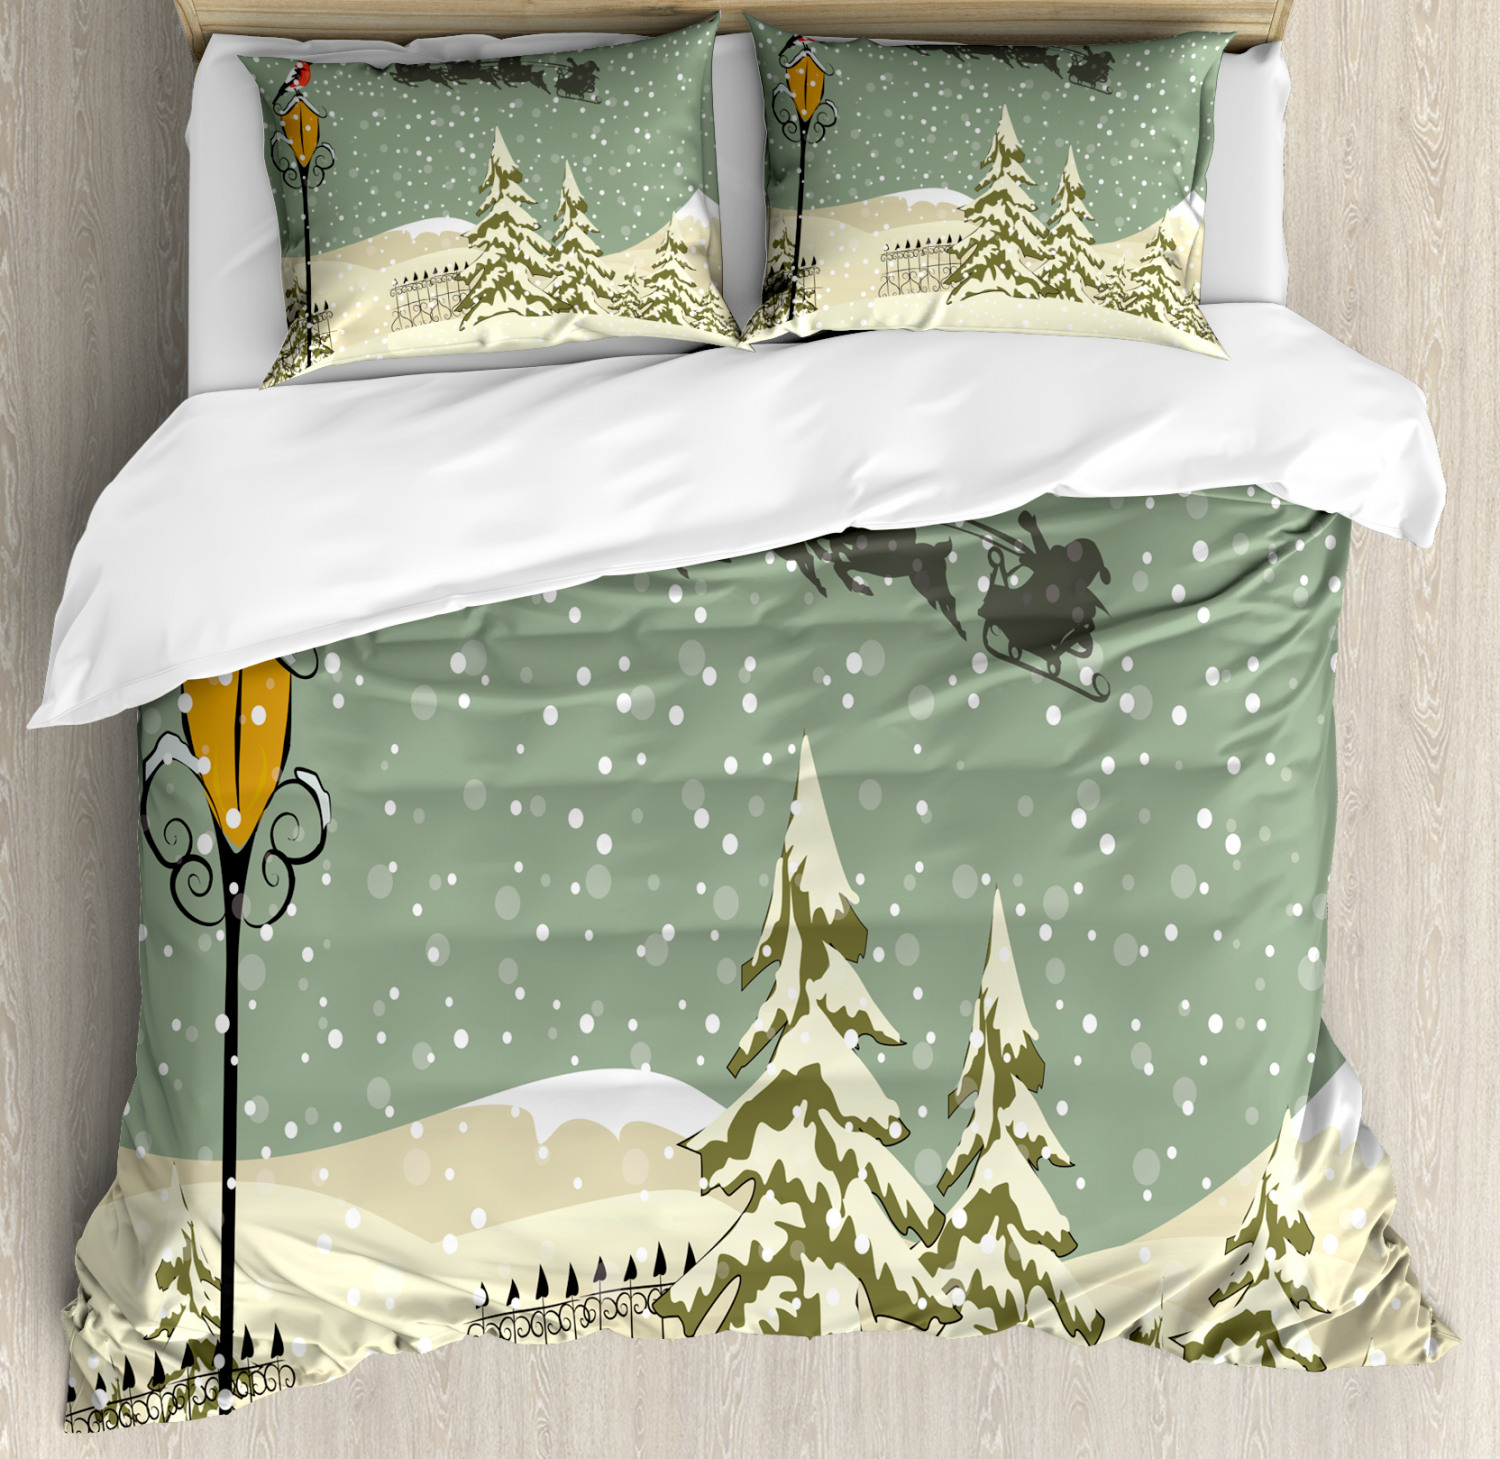 Christmas Quilted Bedspread & Pillow Shams Set Santa Claus Reindeer Print 